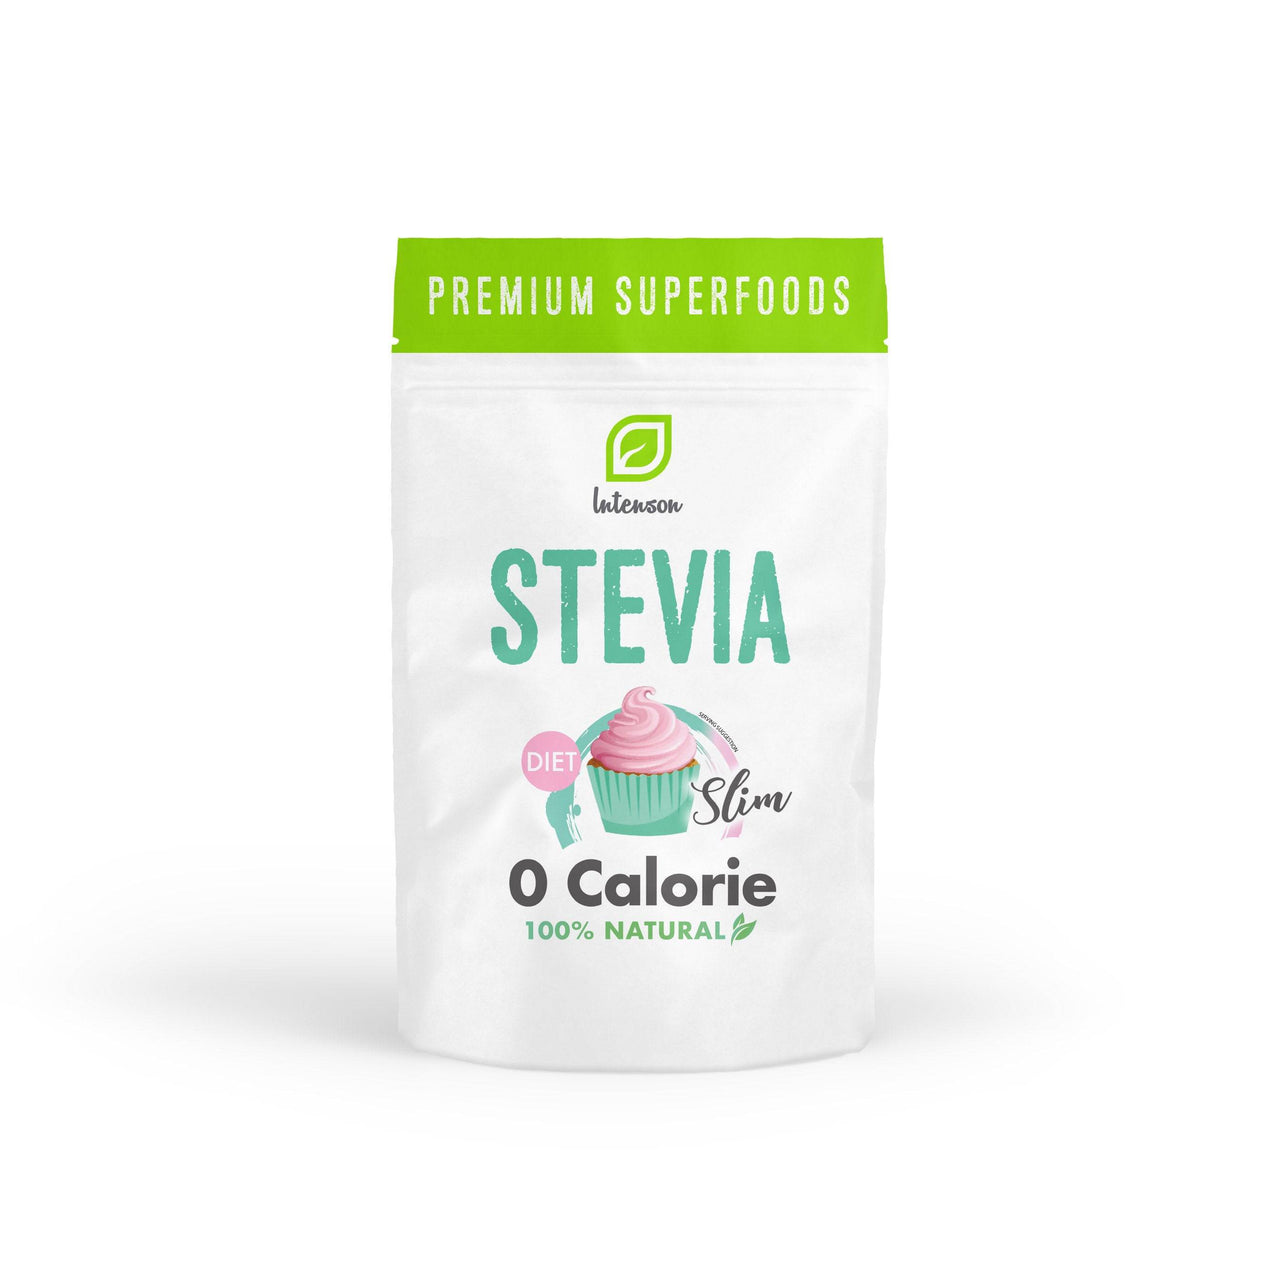 Stevia w kryształkach 1kg (250g x 4) - 0 kcal - Intenson.pl